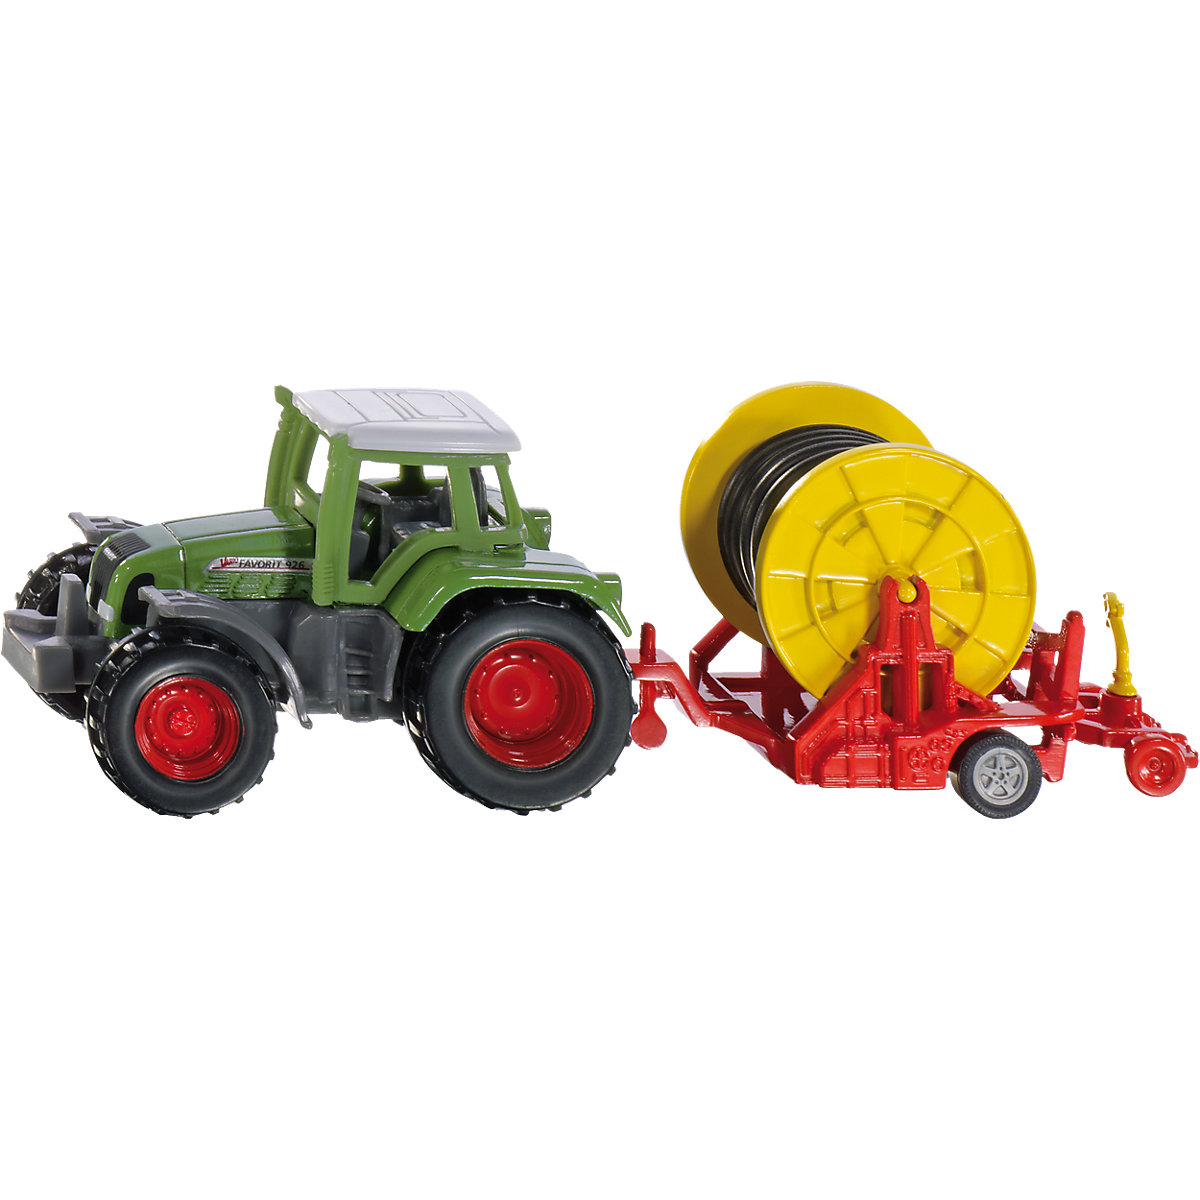 SIKU 1677 Traktor mit Bewässerungshaspel